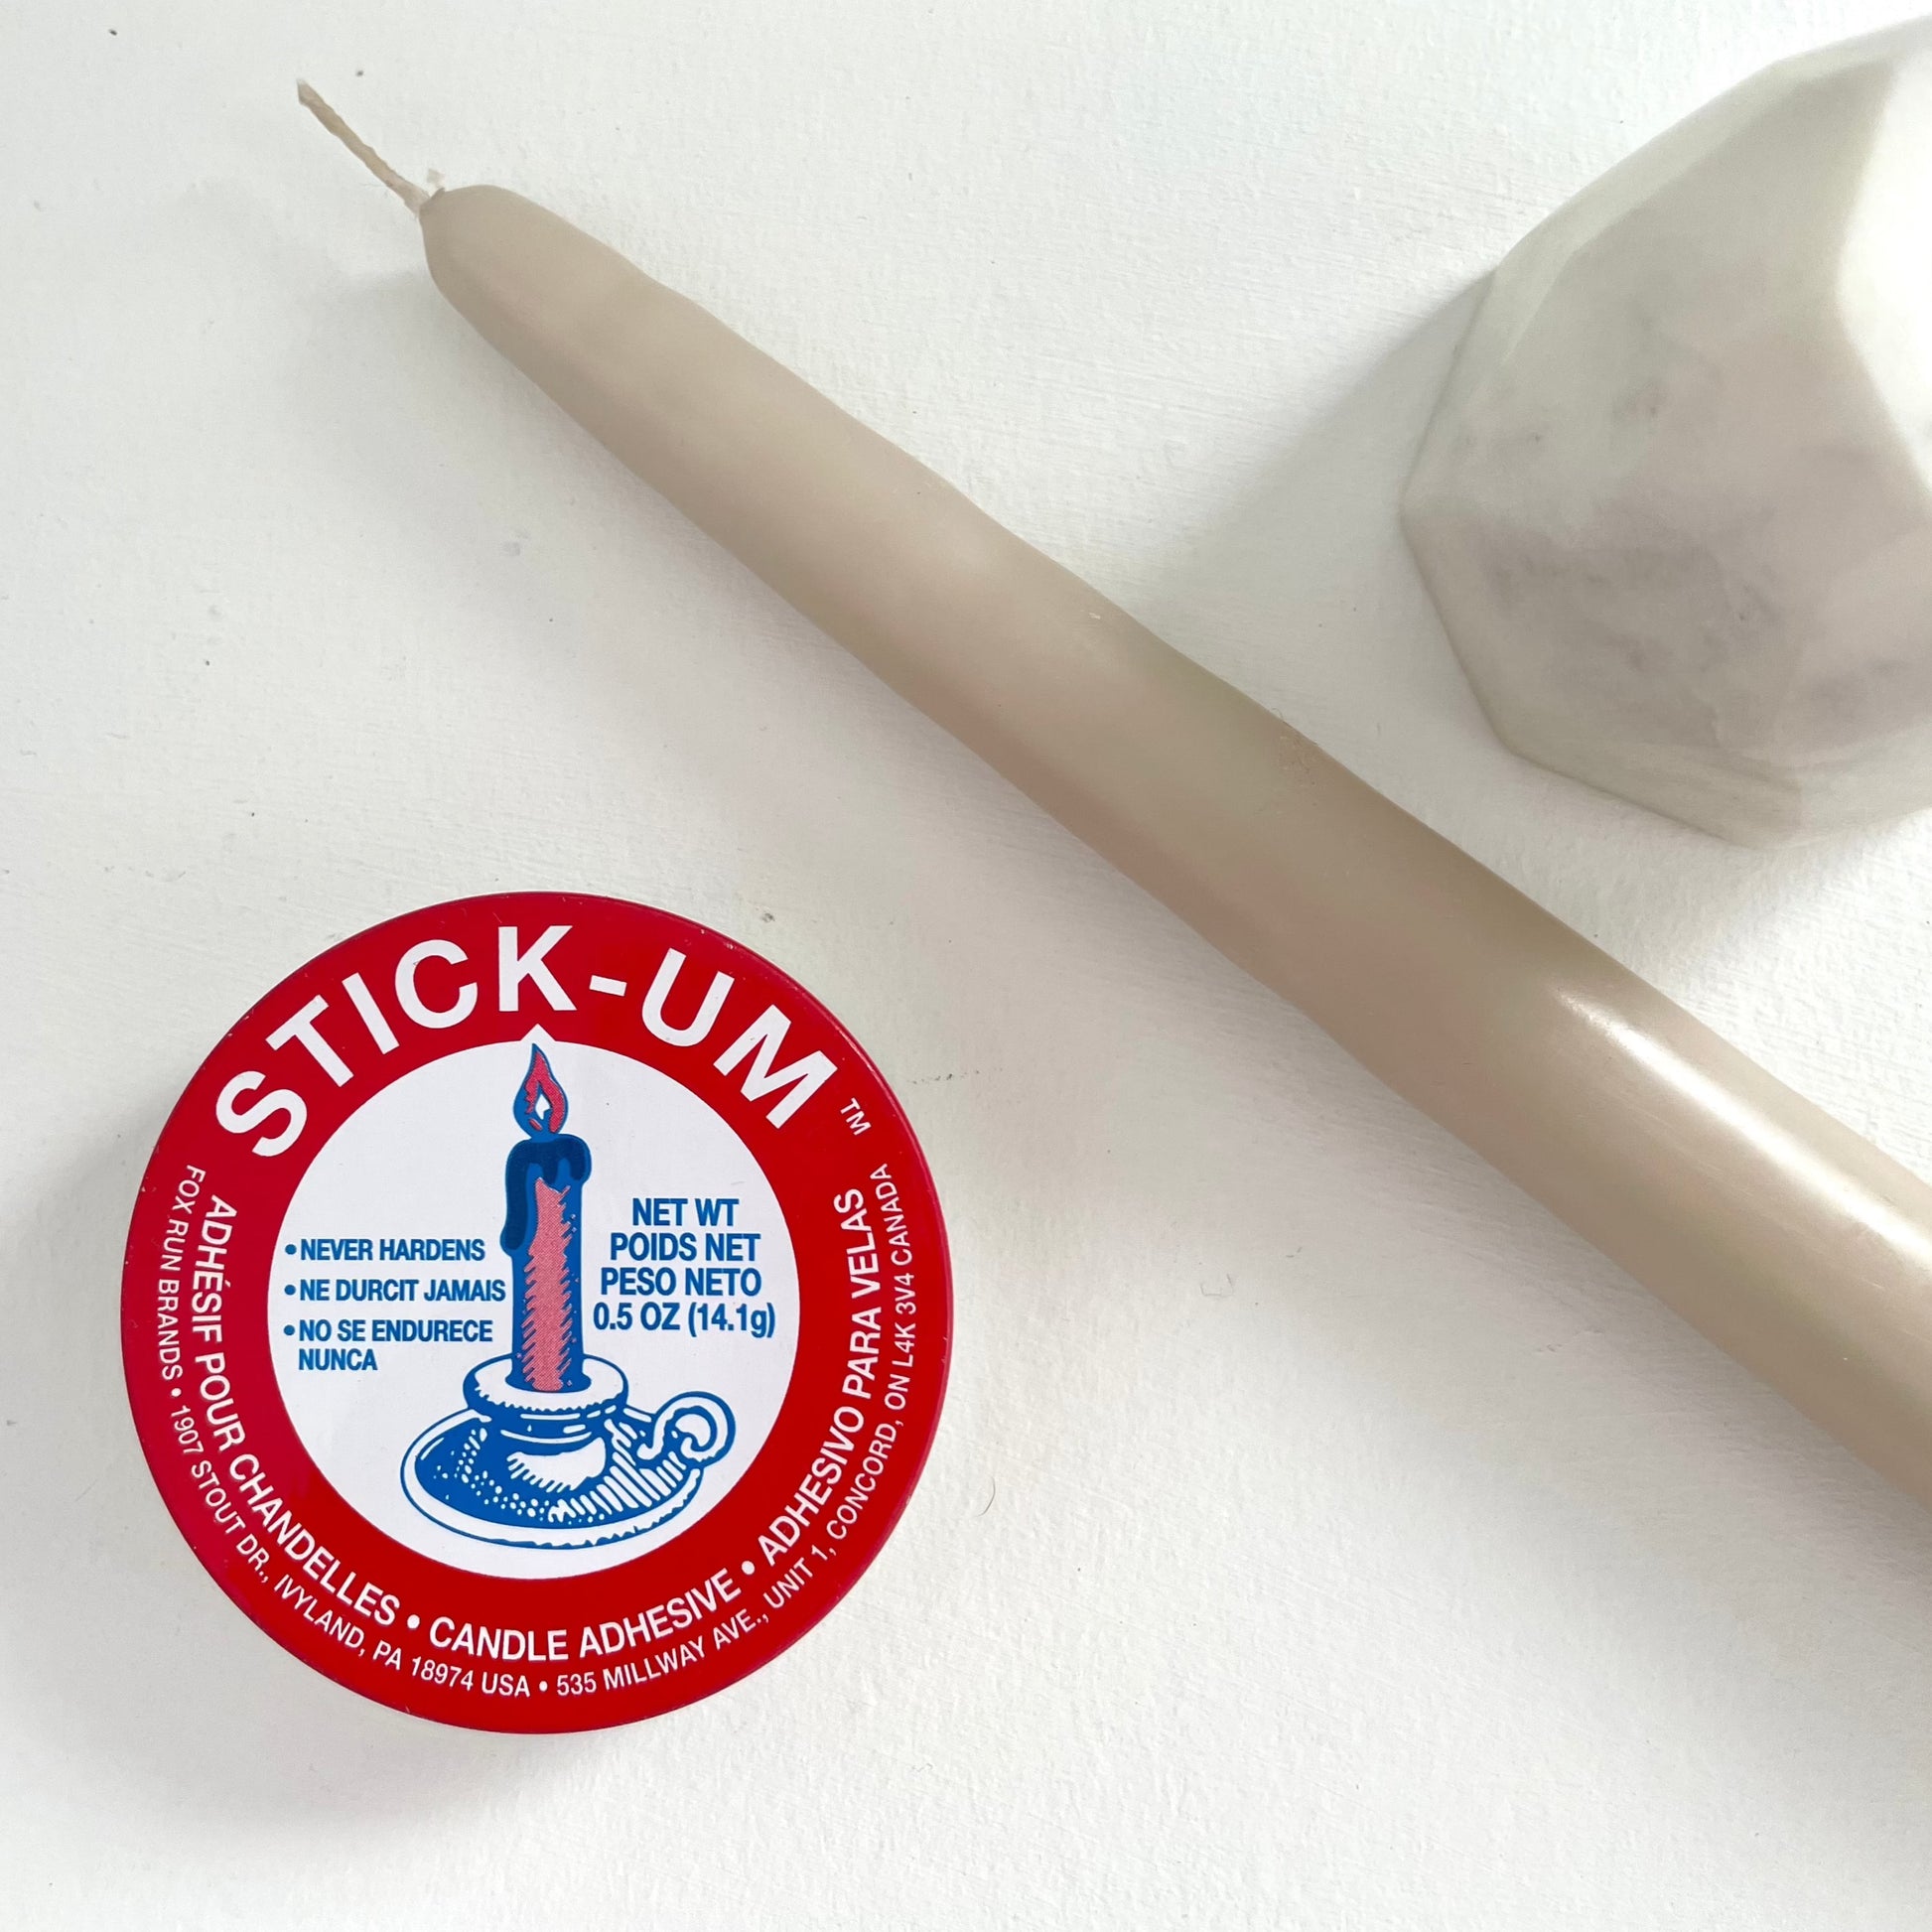 stick-um candle adhesive